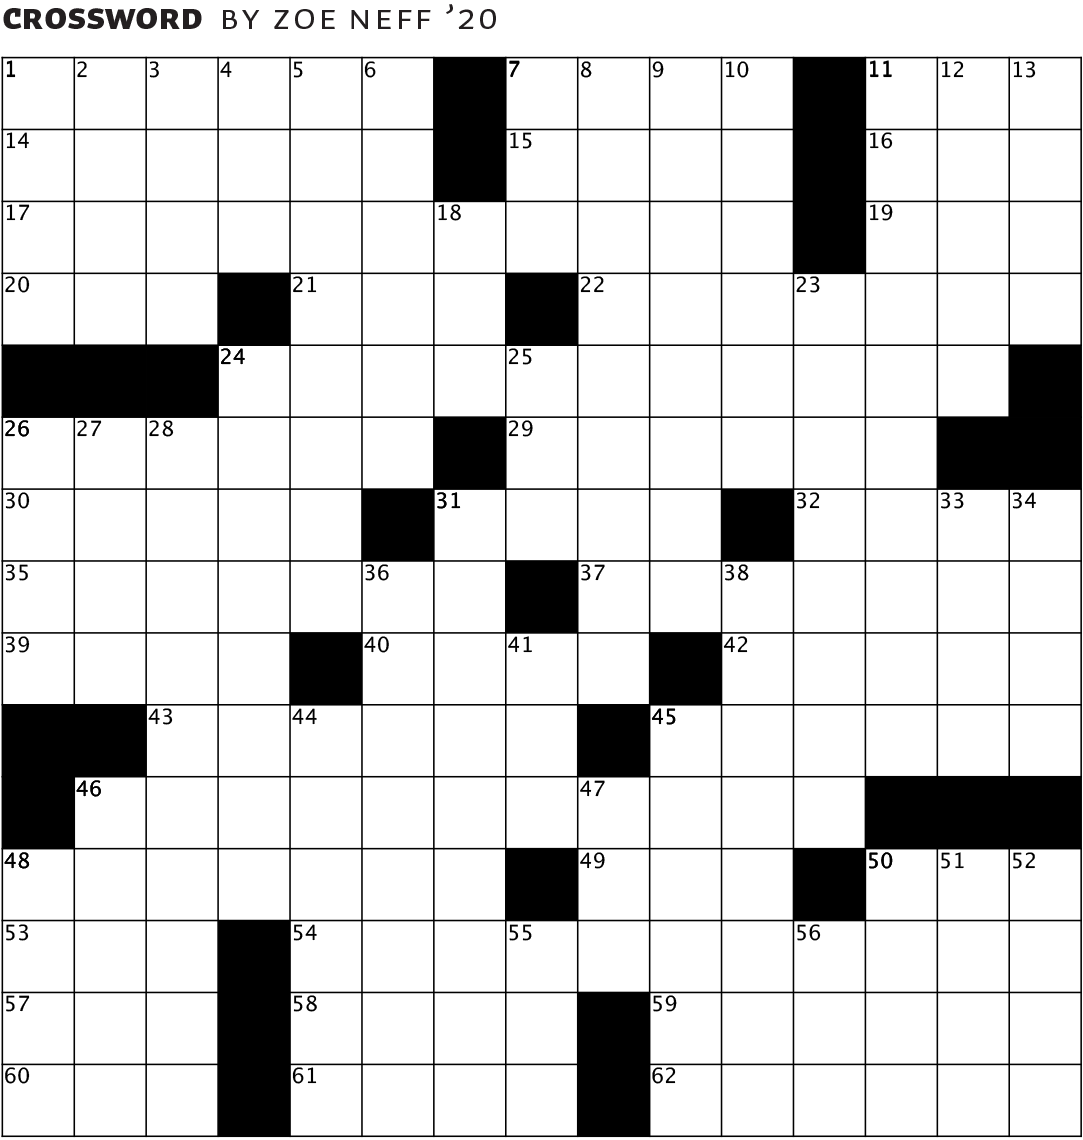 March 2018 crossword puzzle